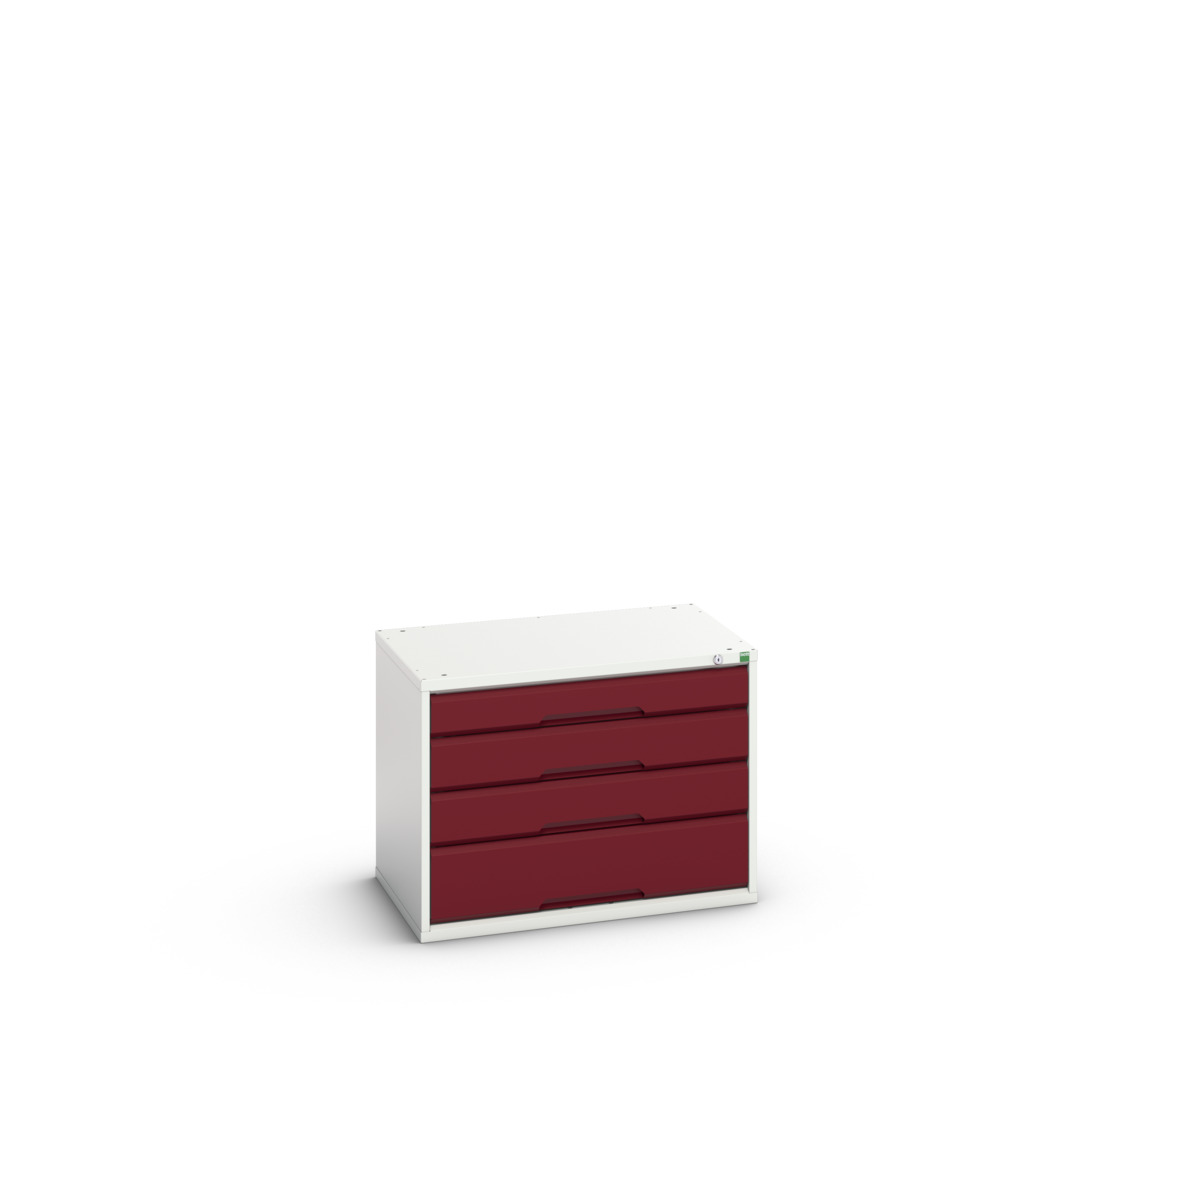 16925104.24 - verso drawer cabinet